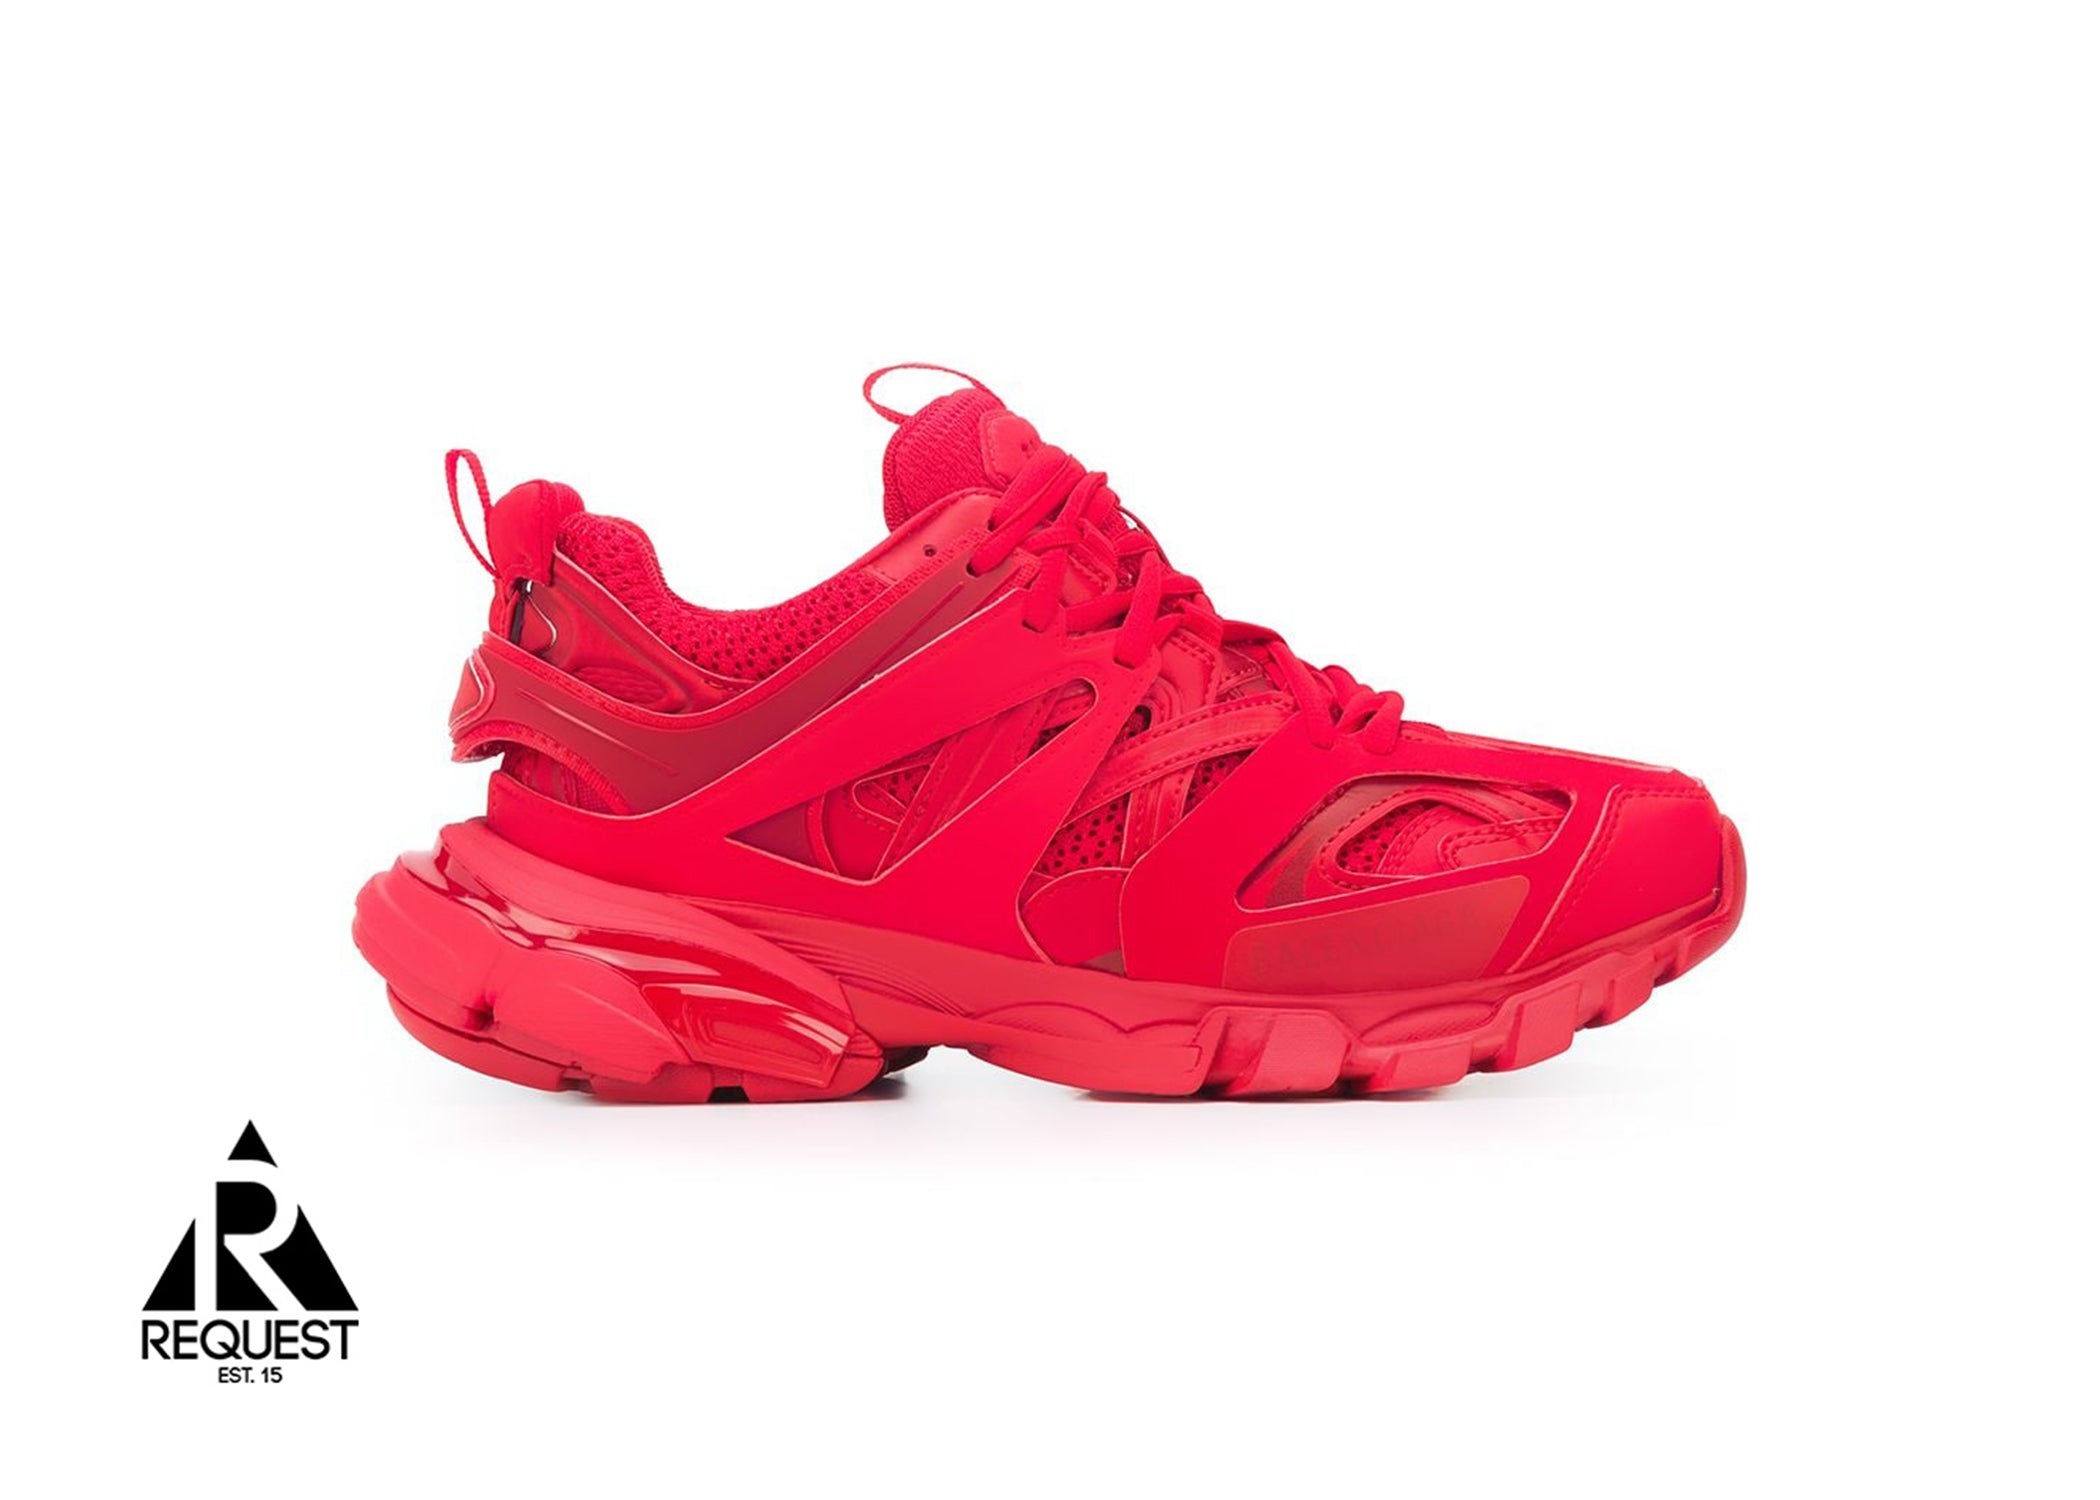 red balenciaga shoes track